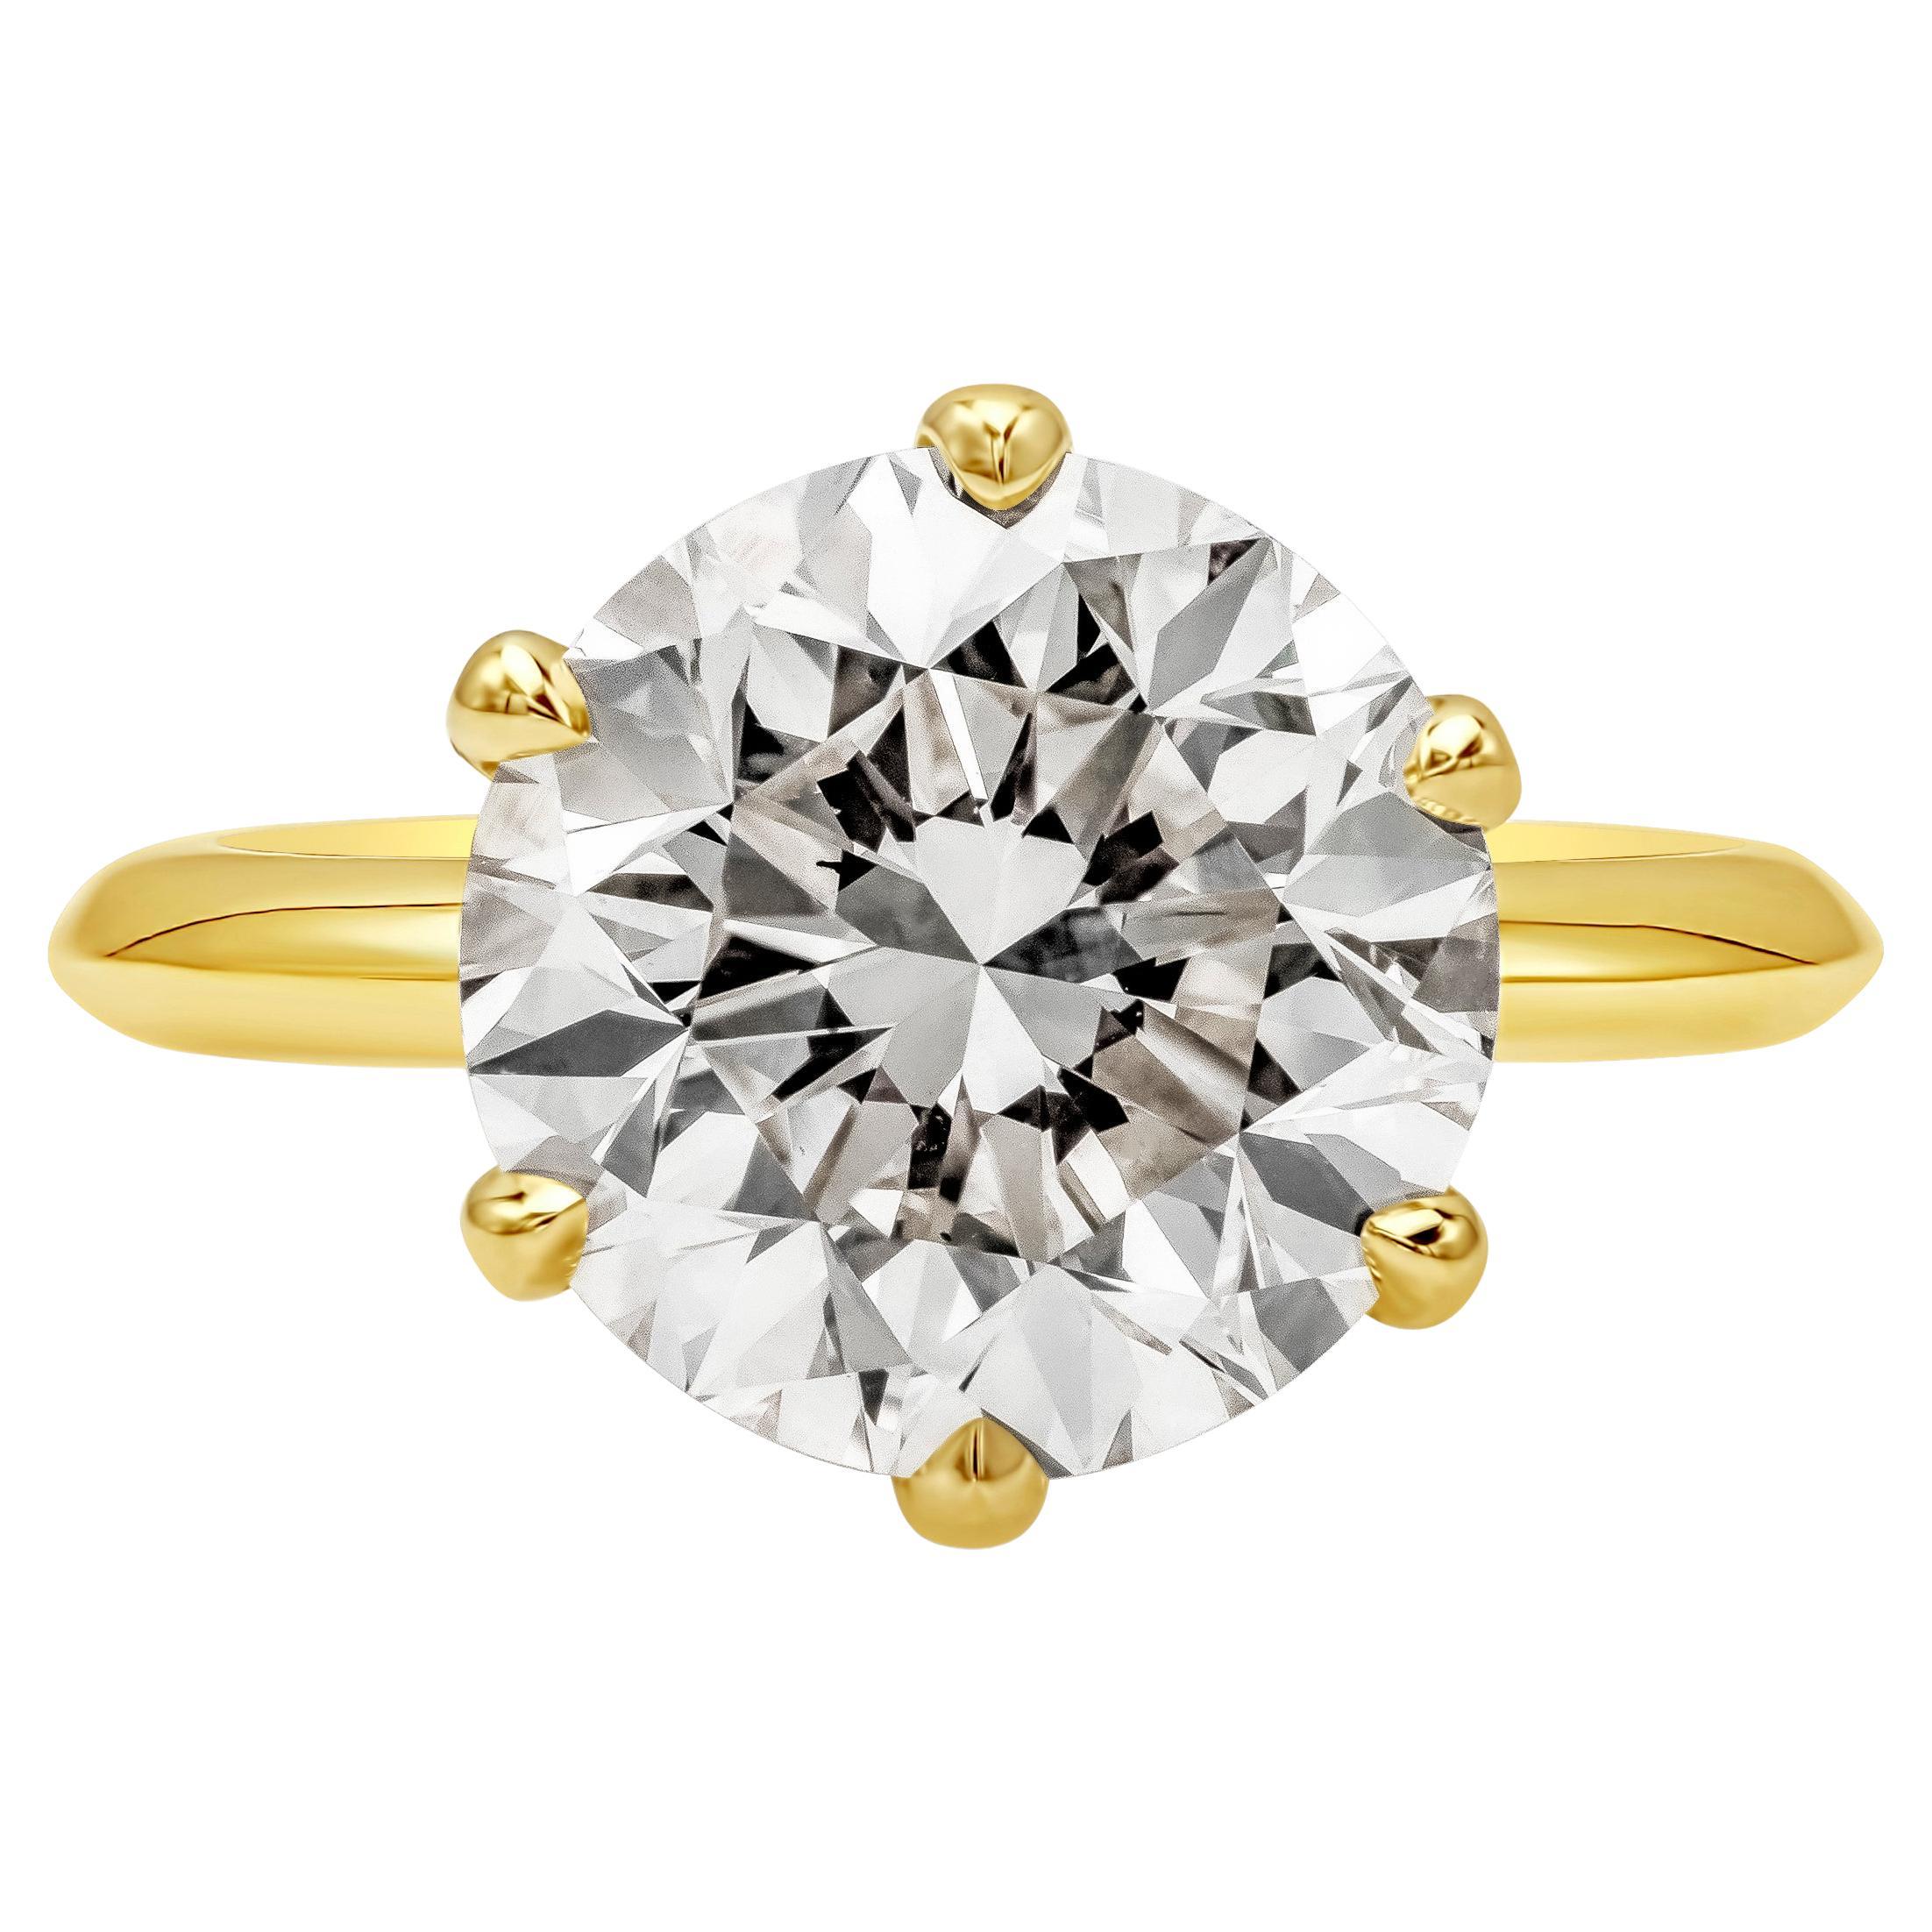 Roman Malakov GIA Certified 5.48 Carat Round Diamond Solitaire Engagement Ring